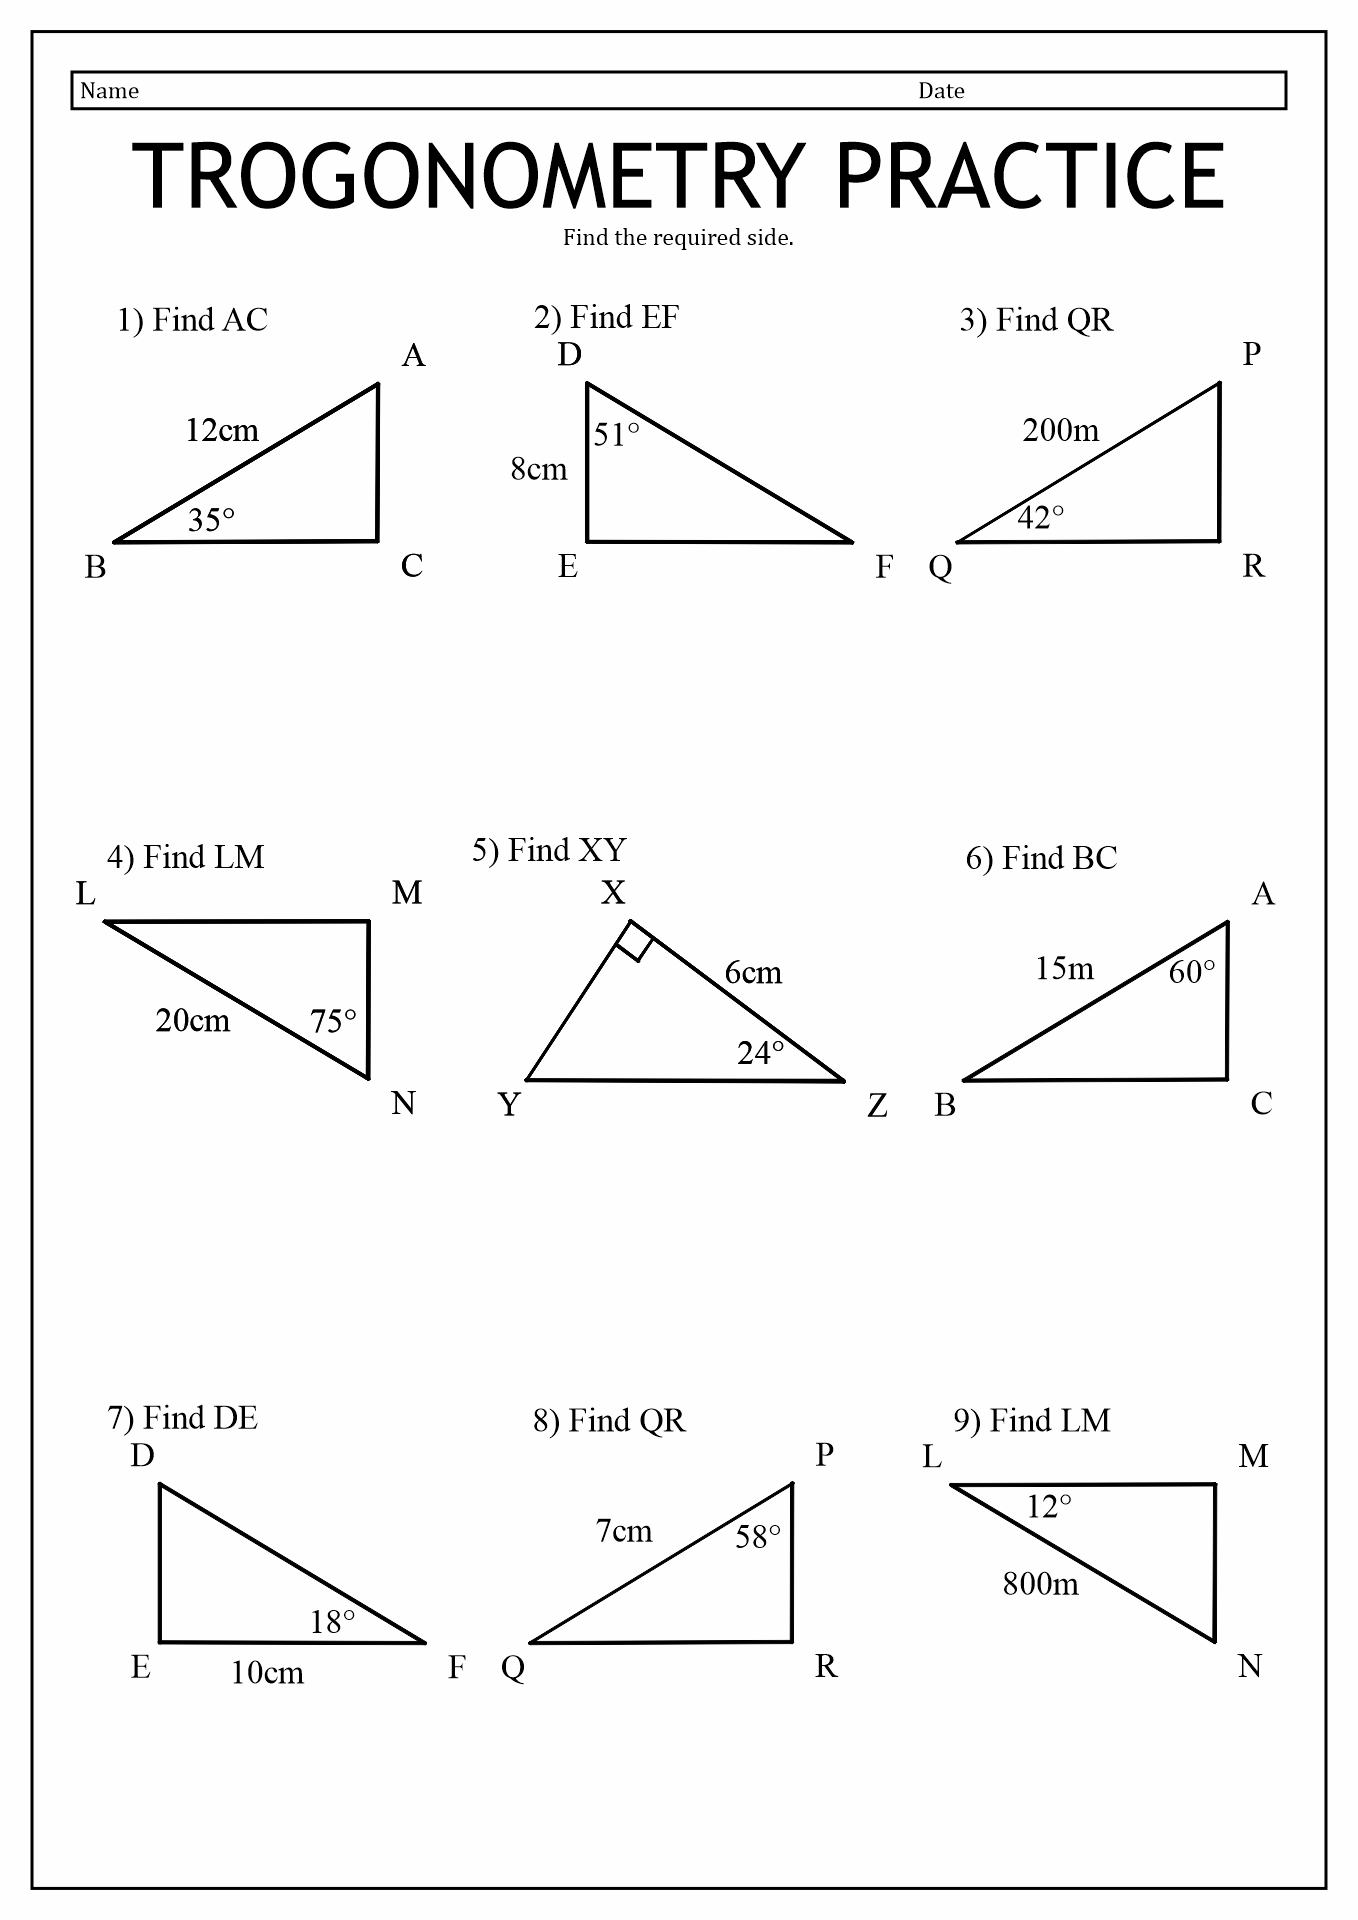 10-best-images-of-trigonometry-sin-cos-tan-worksheets-trigonometry-sin-cos-tan-trigonometric